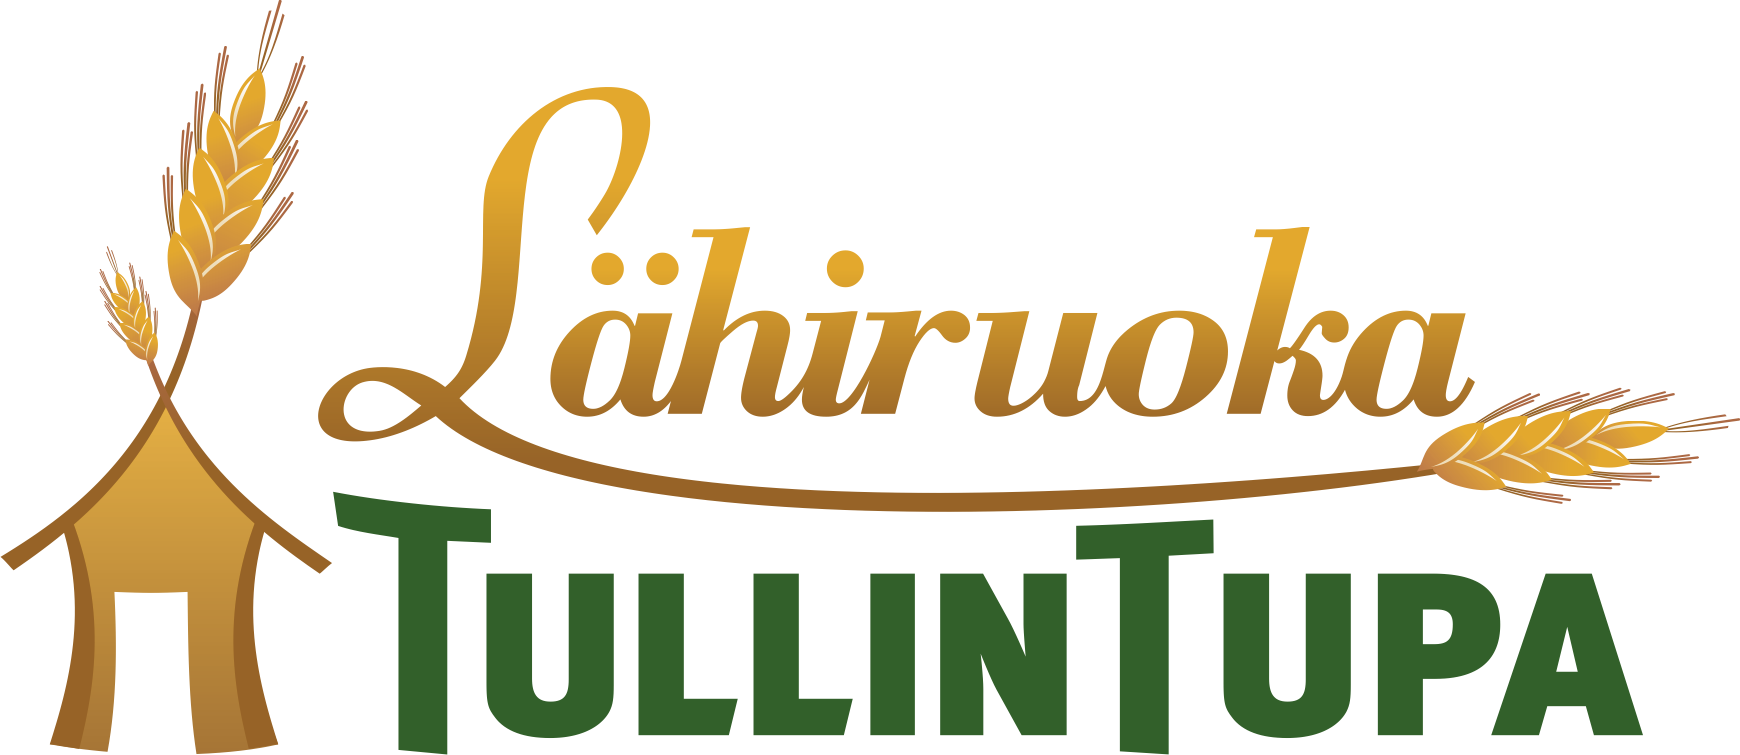 Tullintupa Logo